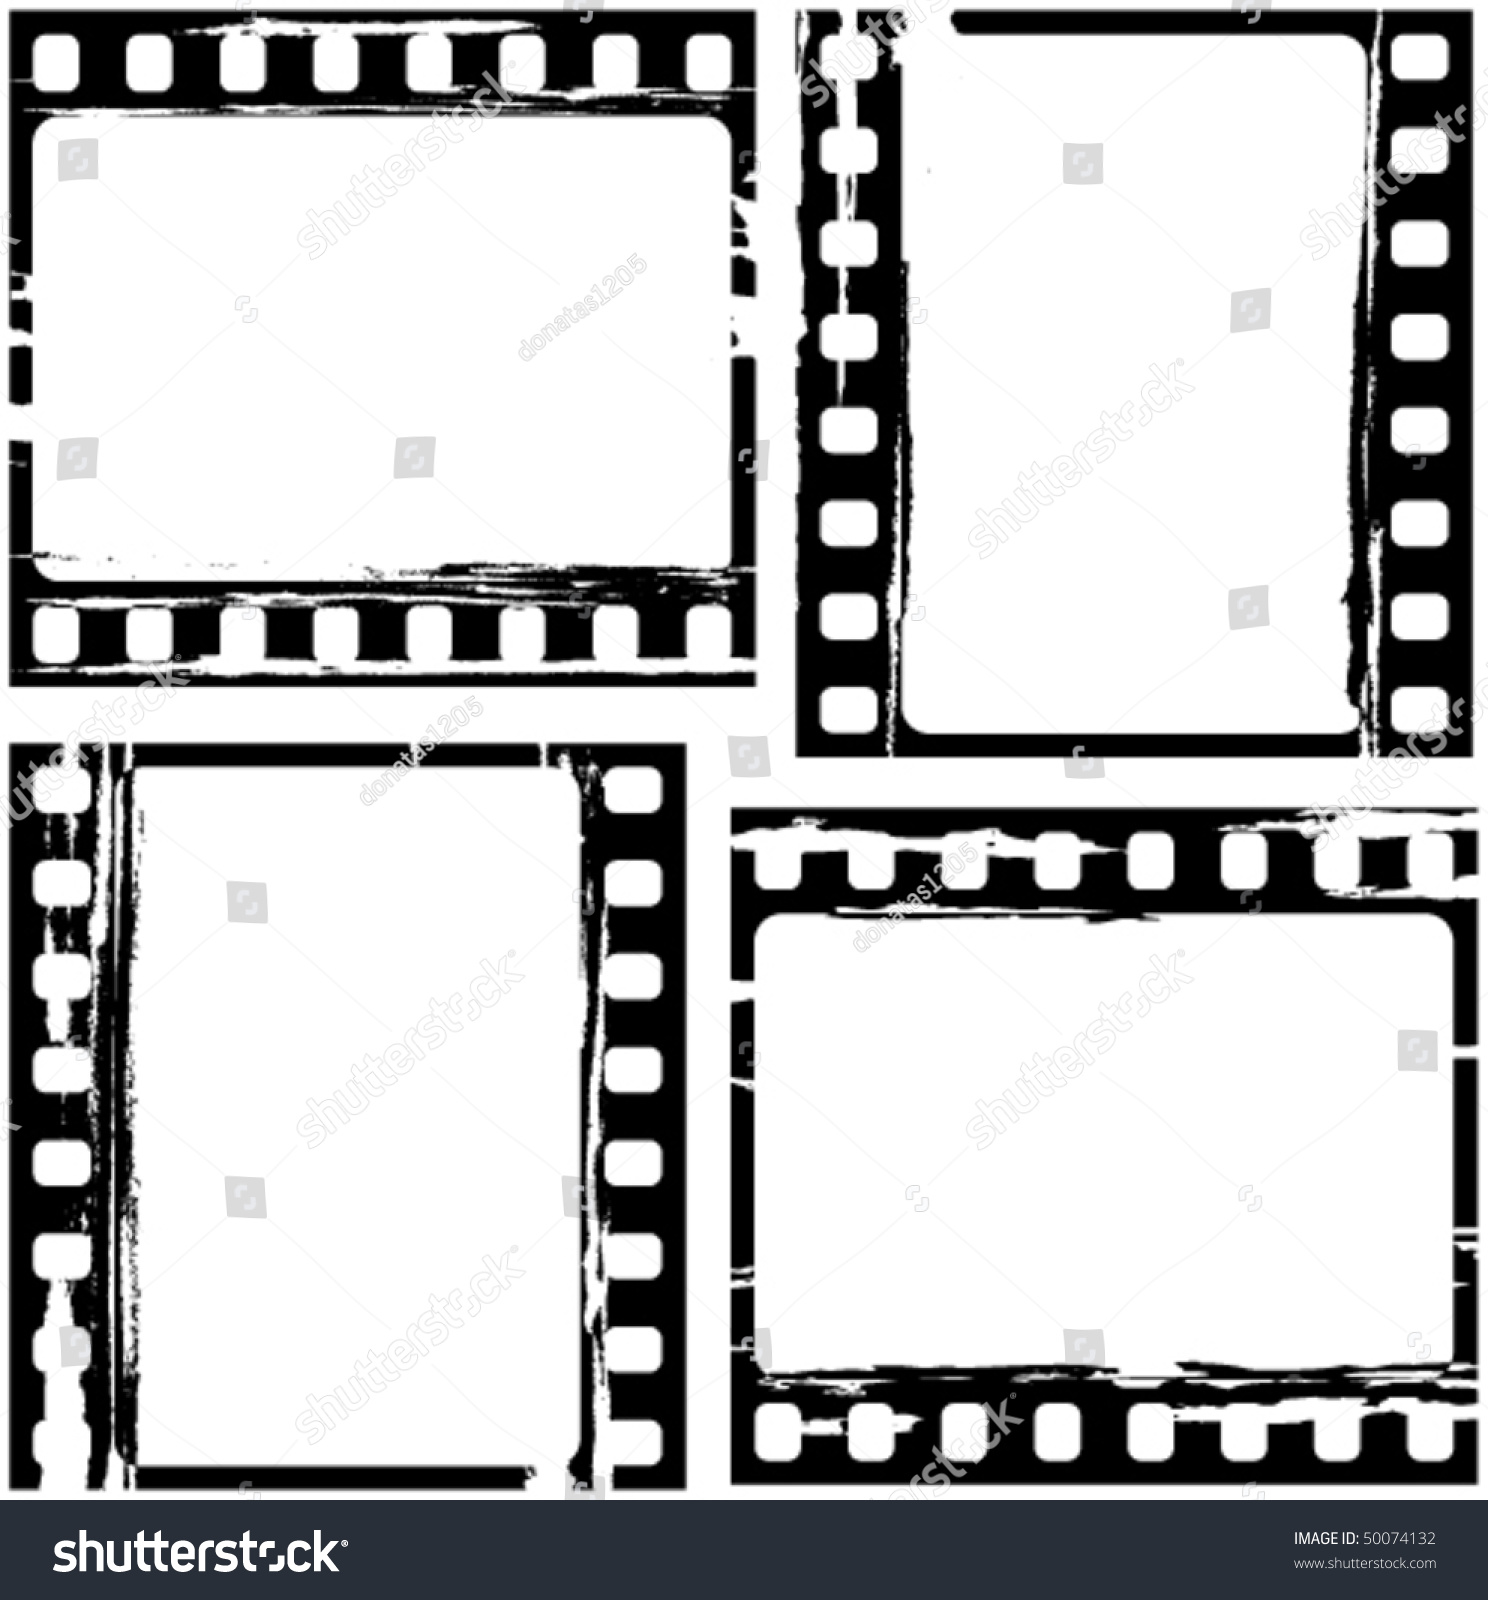 Vector Set Of Grunge Film Frame Samples - 50074132 : Shutterstock